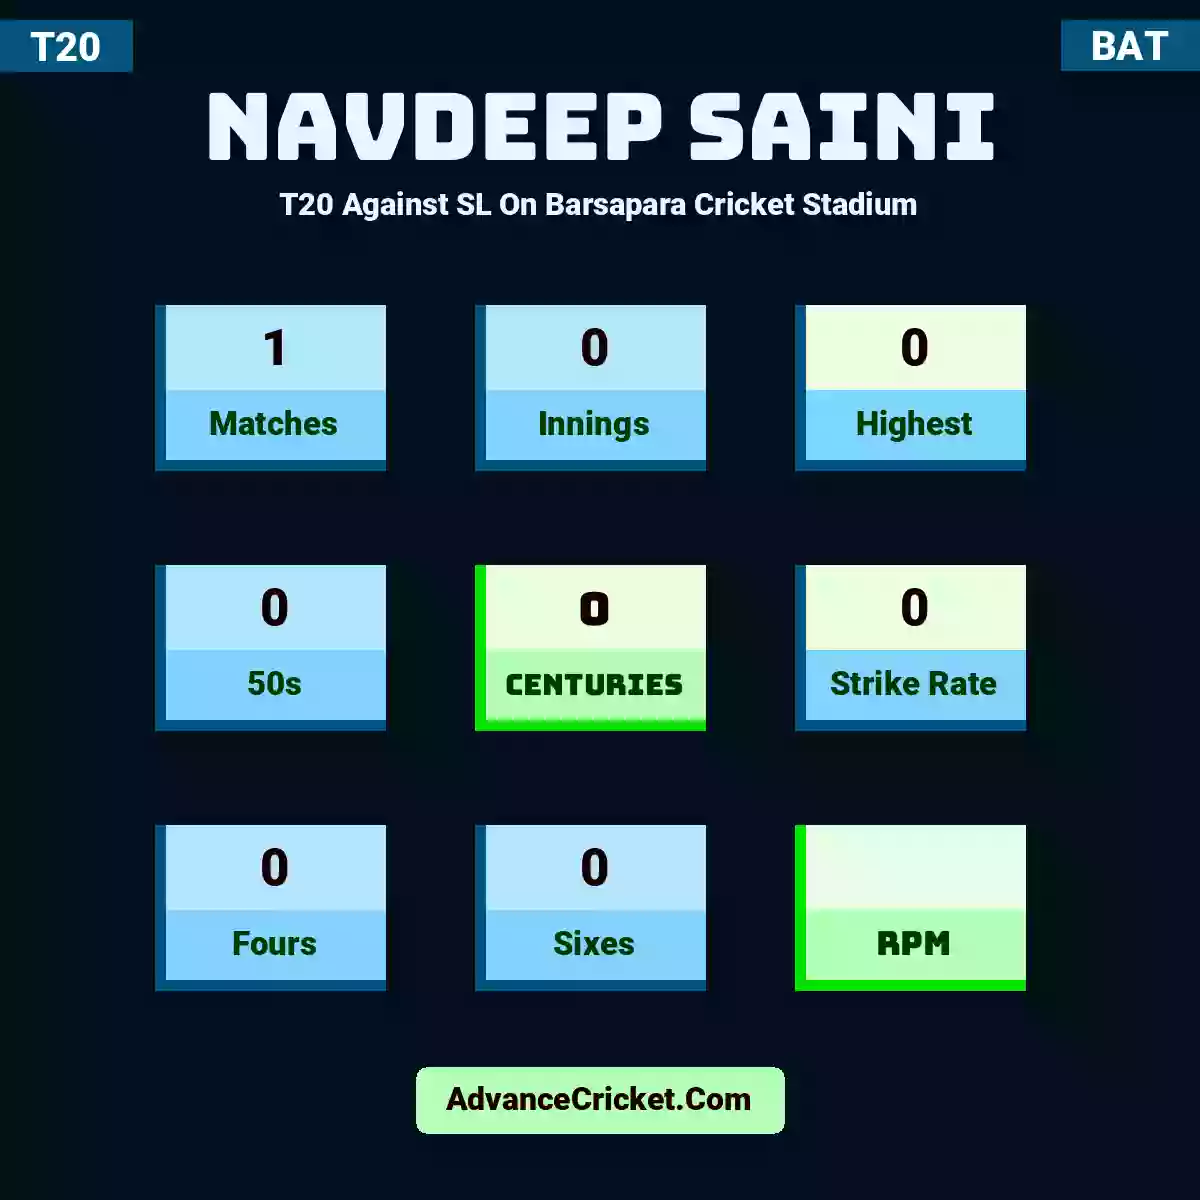 Navdeep Saini T20  Against SL On Barsapara Cricket Stadium, Navdeep Saini played 1 matches, scored 0 runs as highest, 0 half-centuries, and 0 centuries, with a strike rate of 0. N.Saini hit 0 fours and 0 sixes.